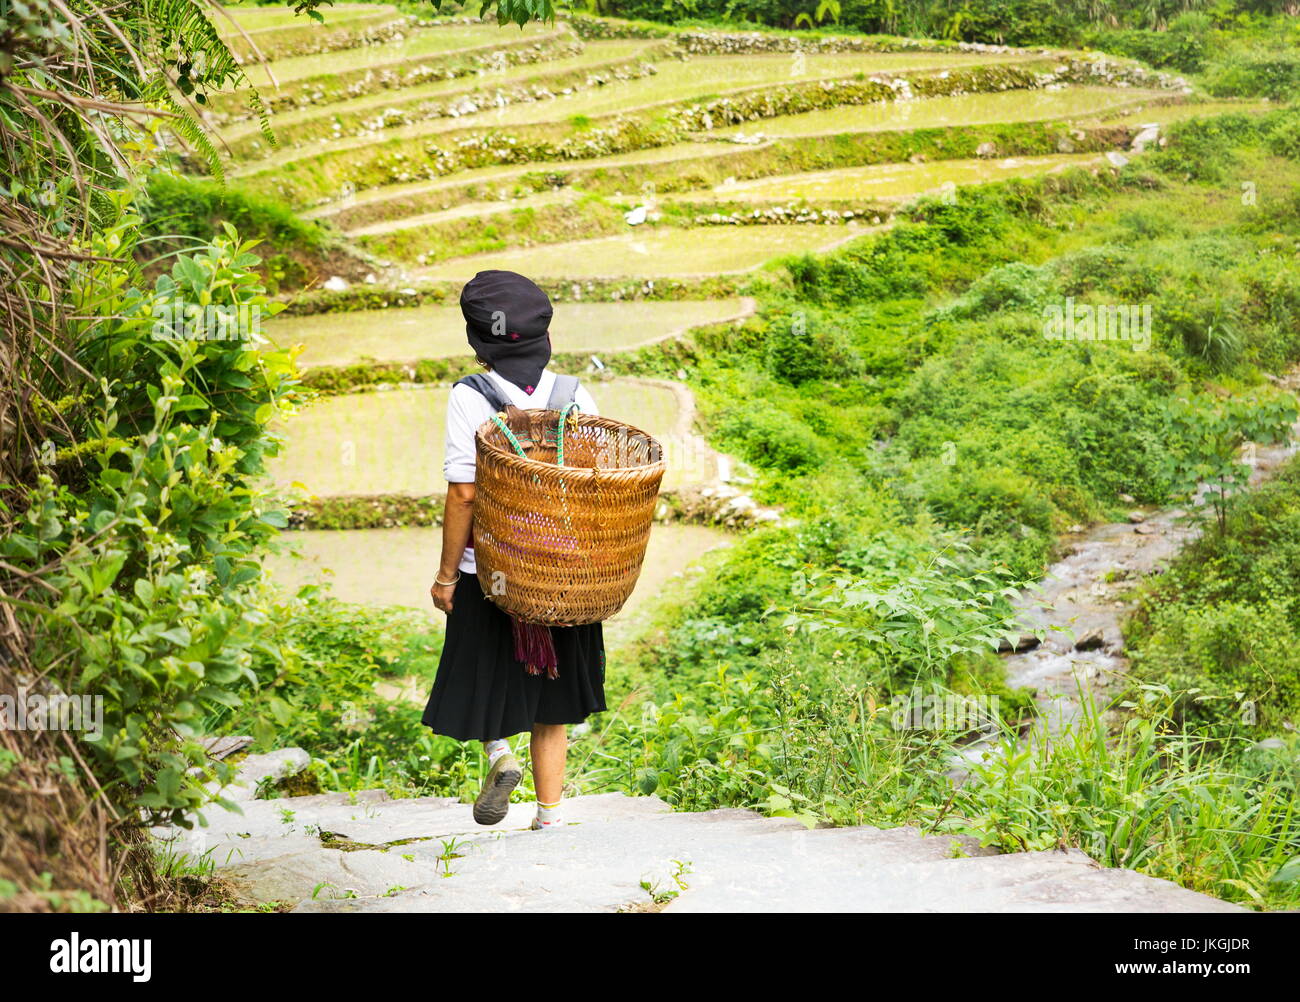 Yao ethnic woman with carrying basket walking around rice terrace field in Longsheng, China Stock Photo